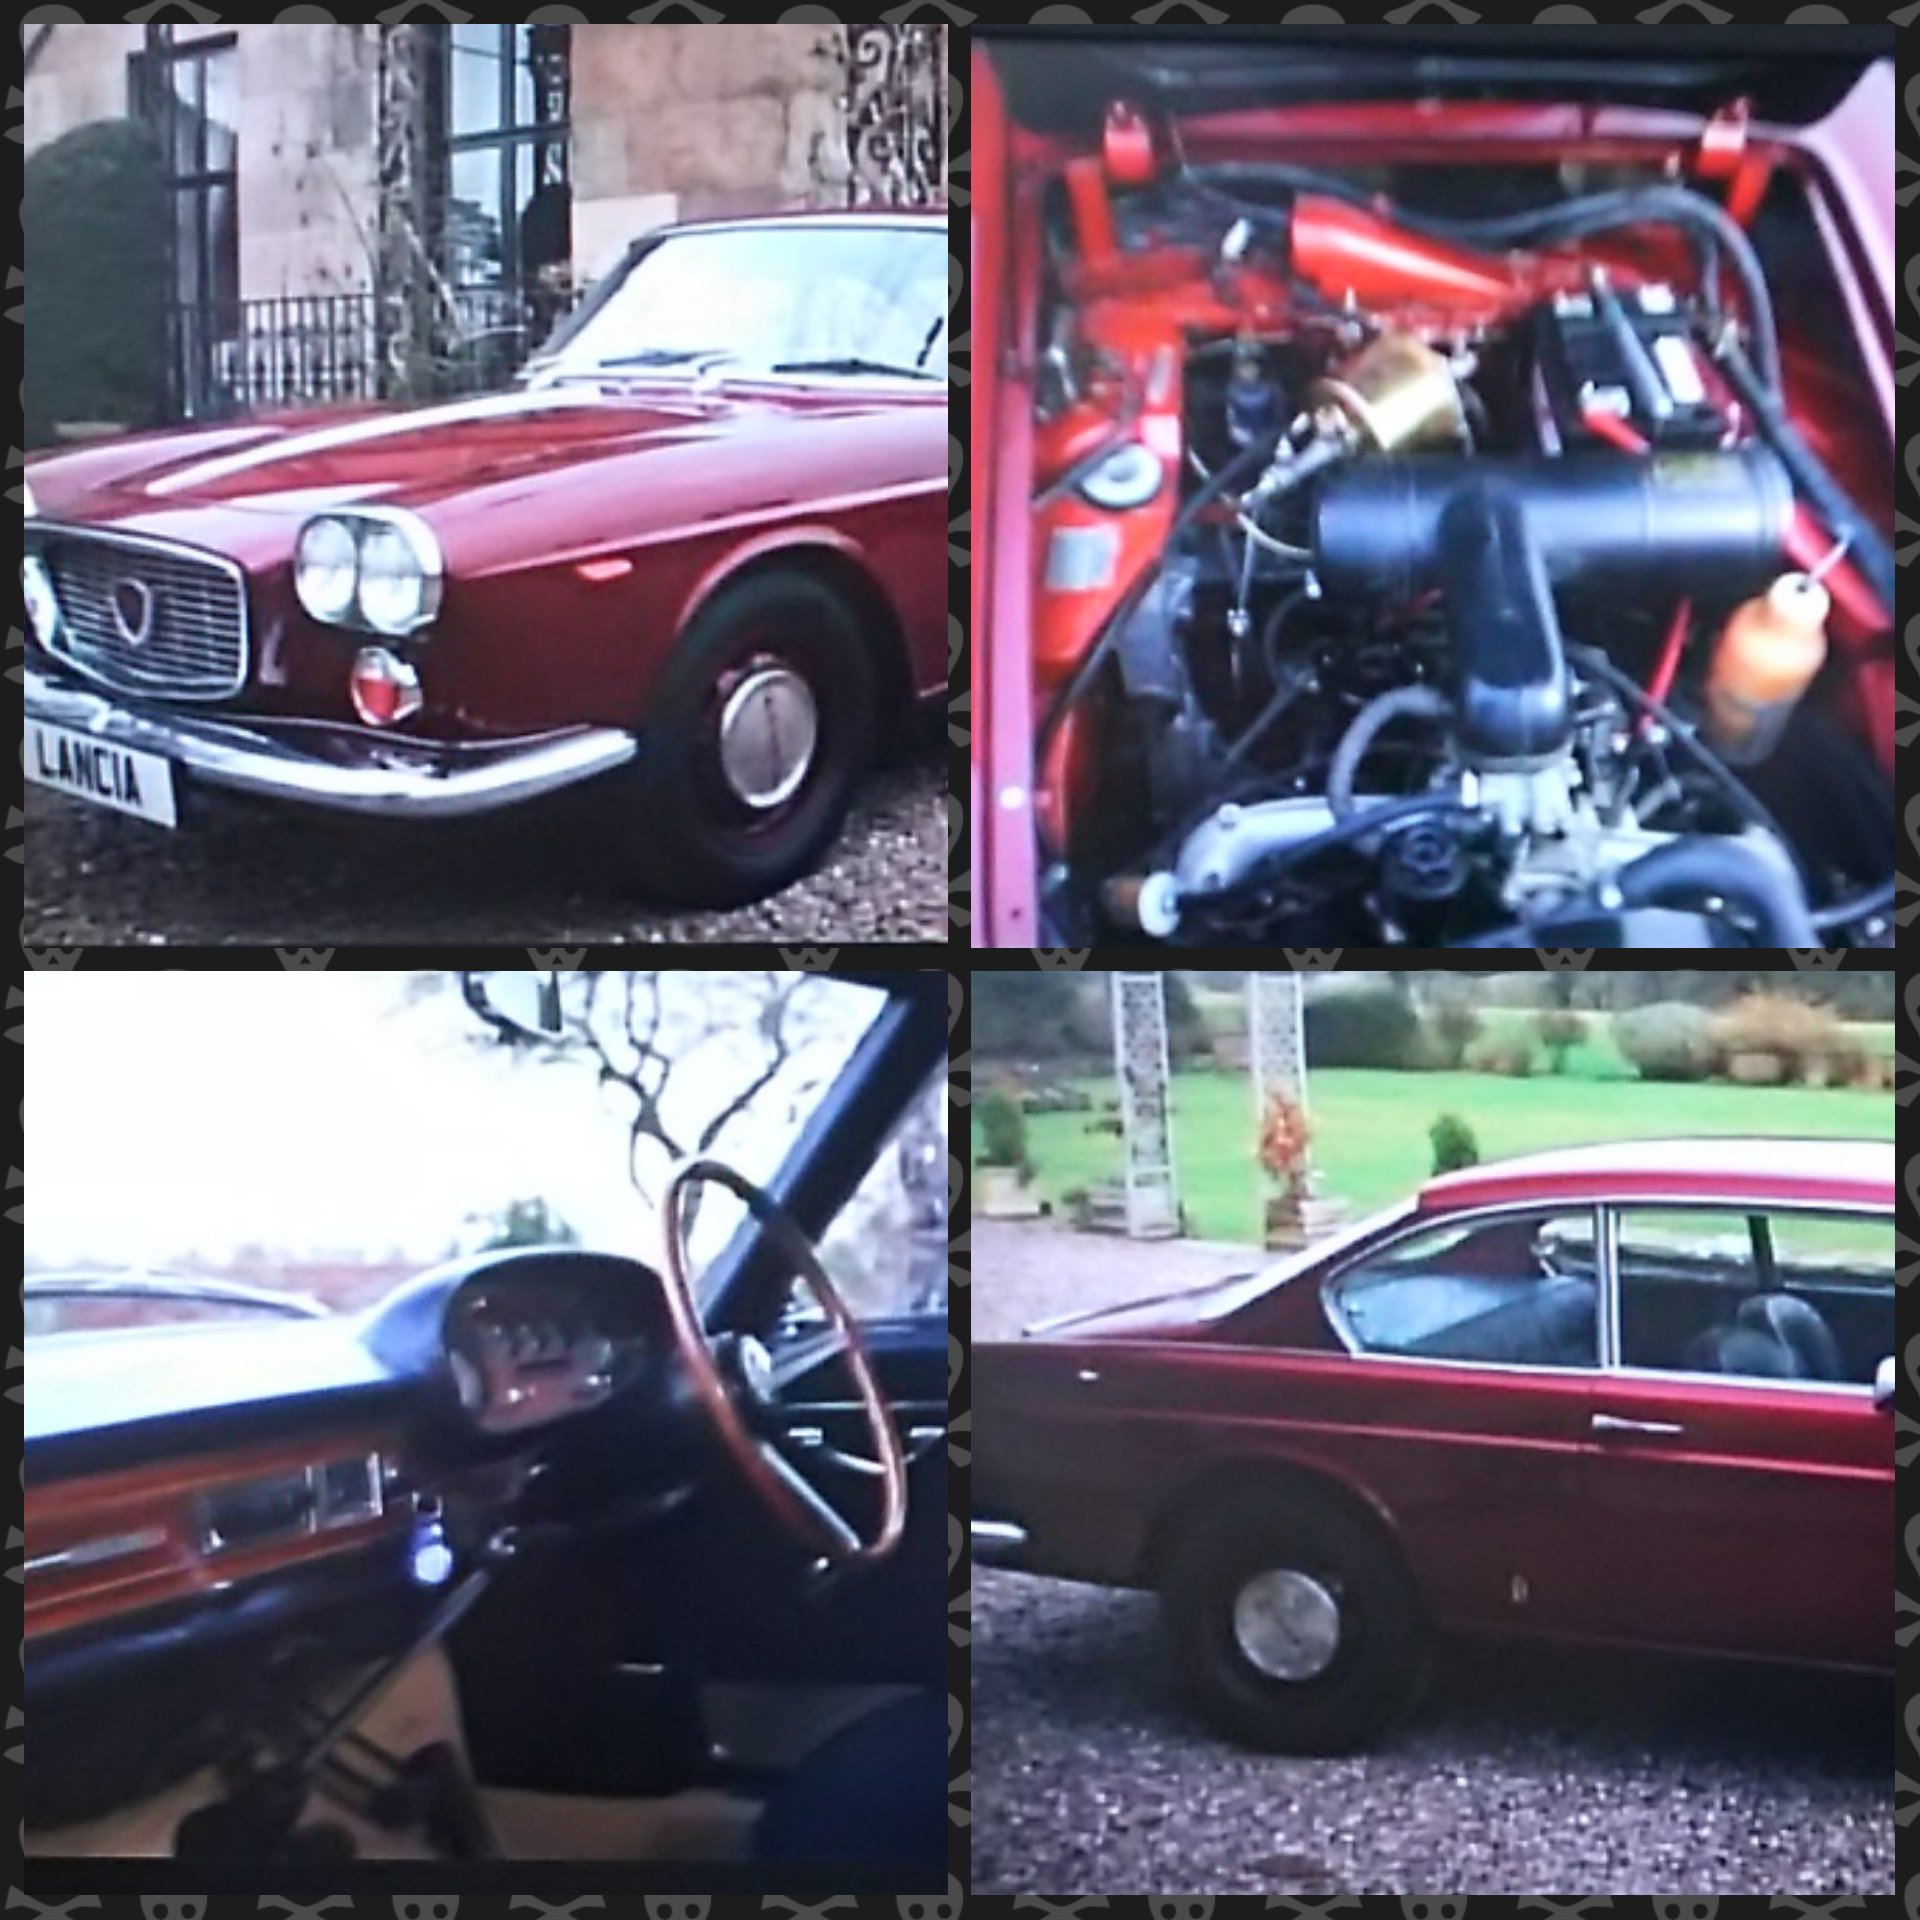 Hiro カー Sos 蘇れ 思い出の名車3 ランチア フラヴィア 1967年式イタリア製 カーsos 思い出の名車3 ランチア フラヴィア ナショナルジオグラフィック Retoro Mode